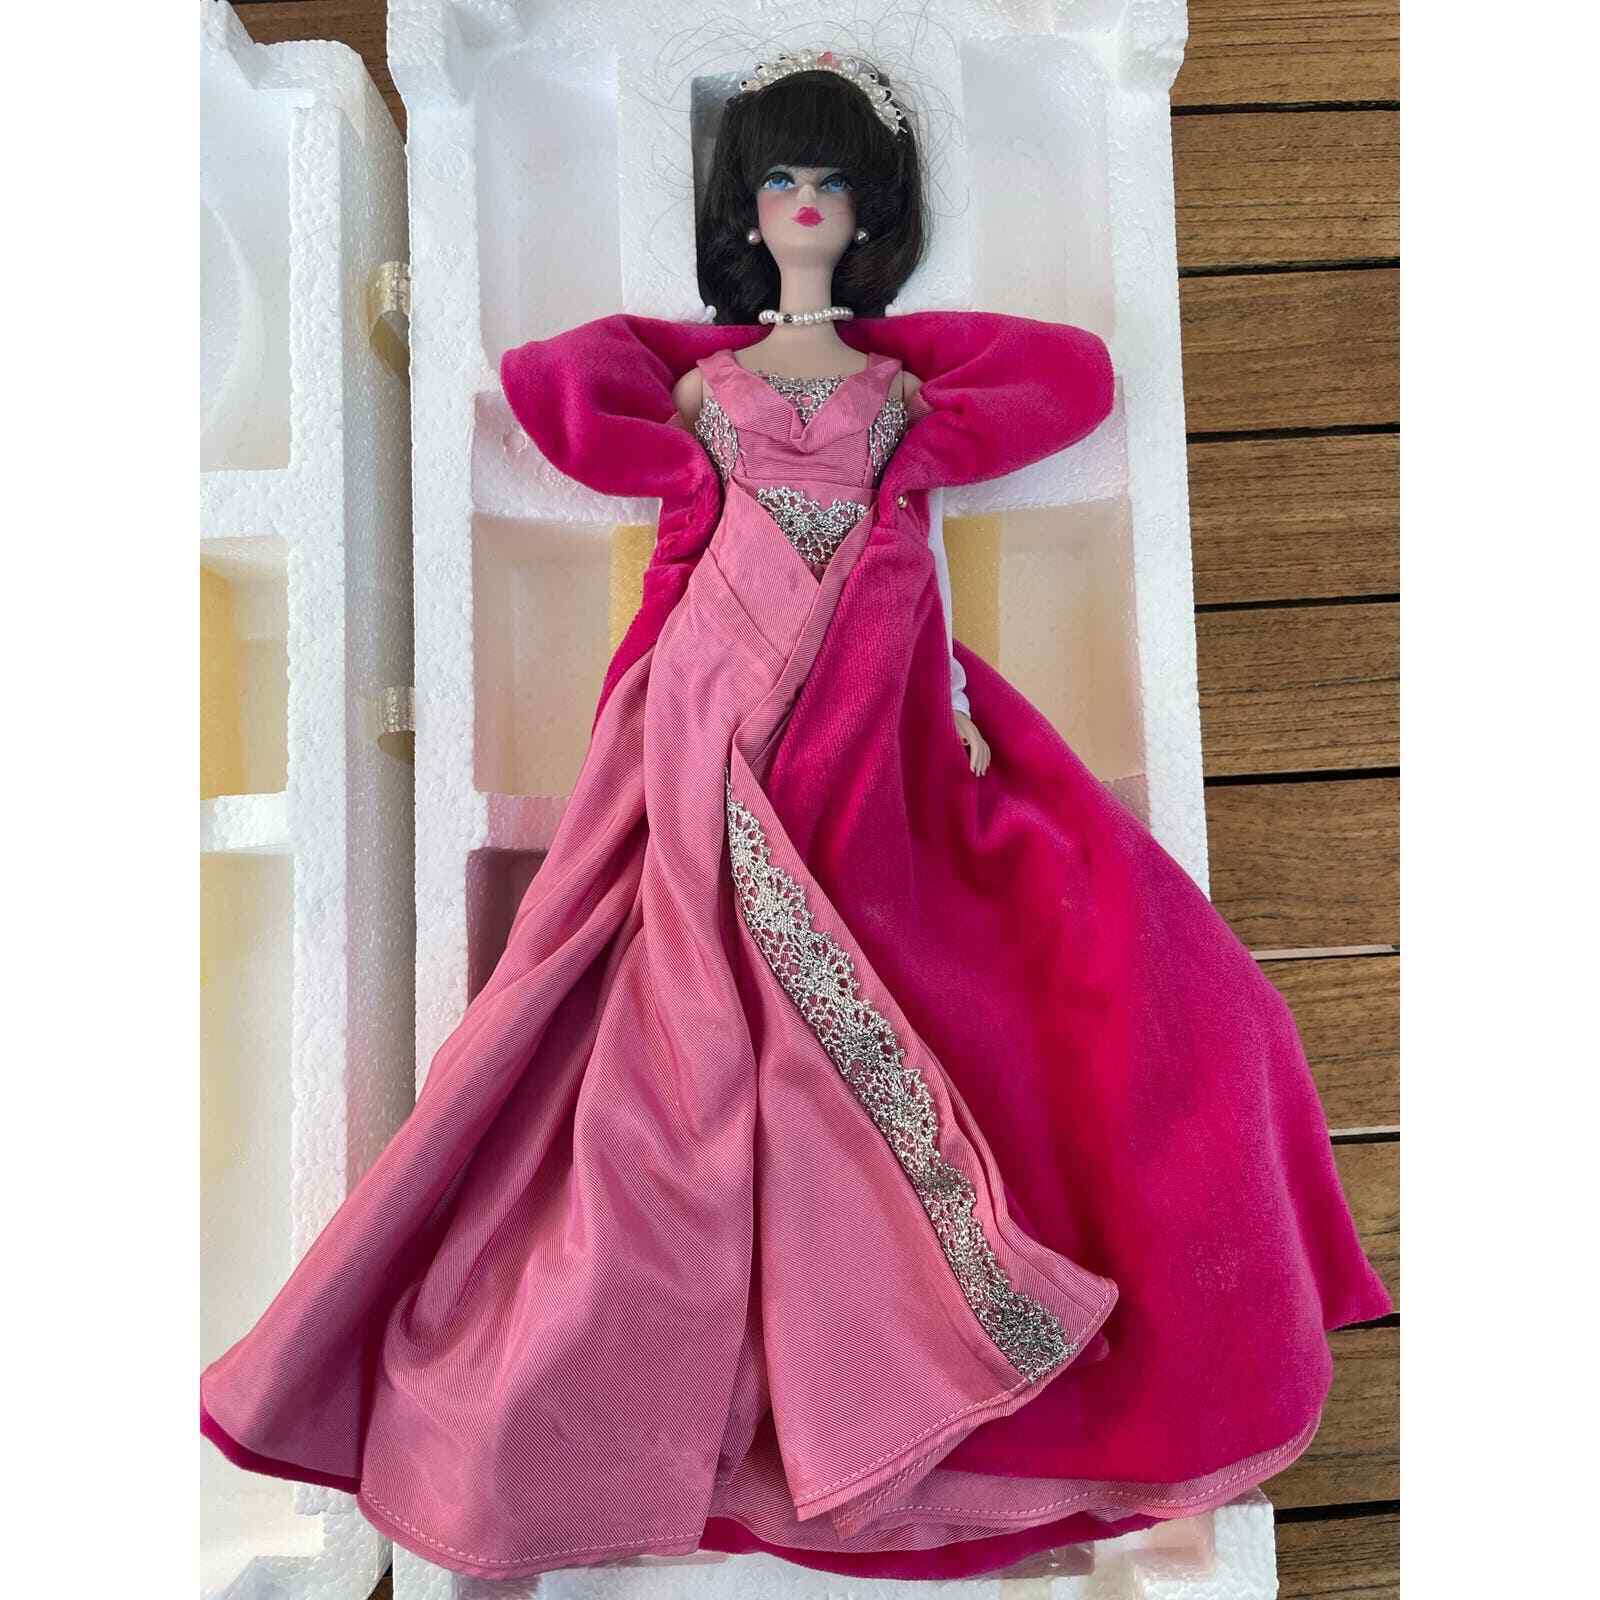 Sophisticated Lady 1965 Barbie Porcelain Doll 5313 Pink Dress Elegant NIB NRFB